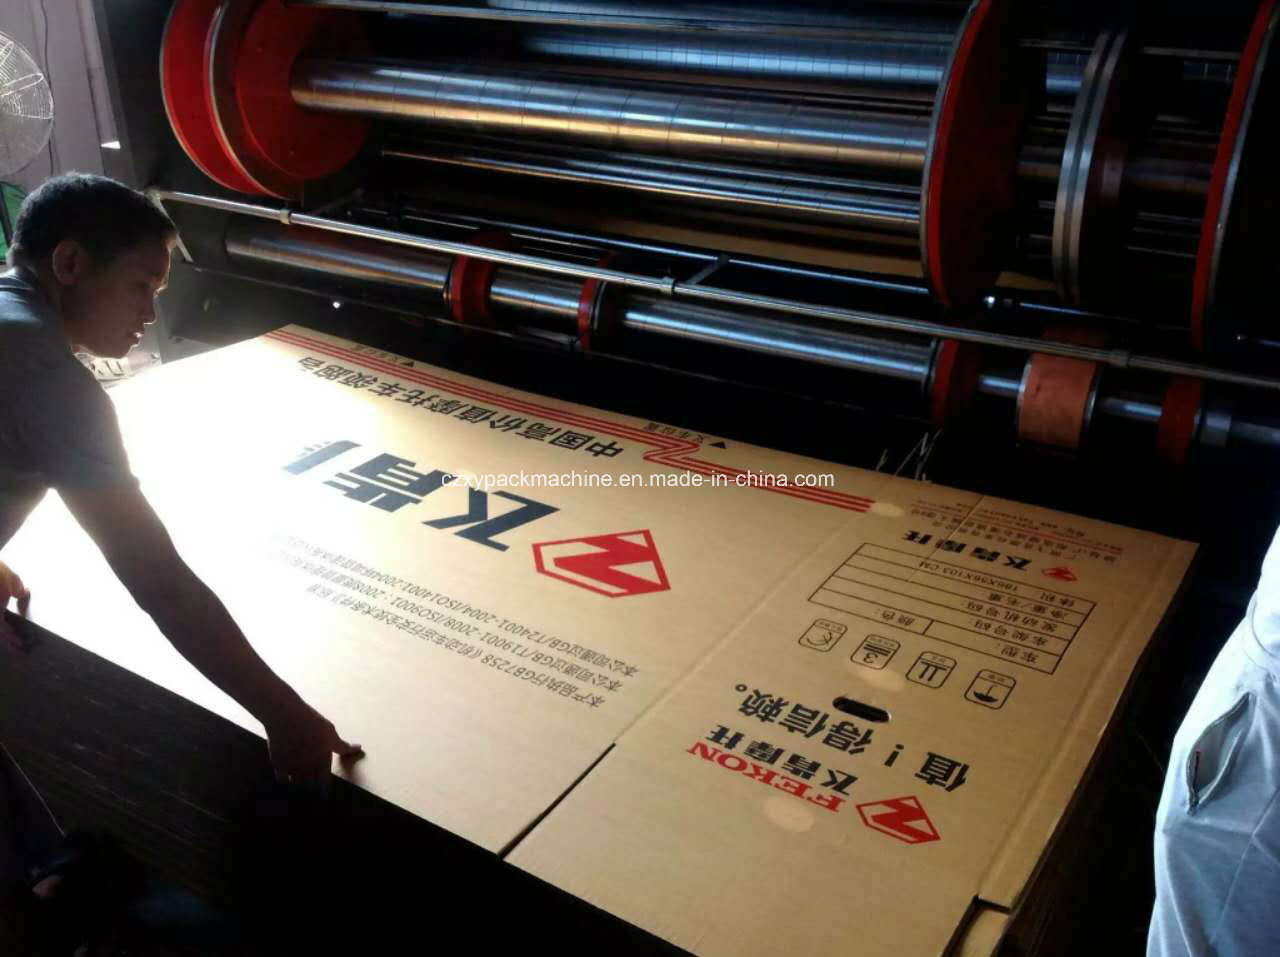 High Quality Corrugated Box Carton Printing Packaging Machine